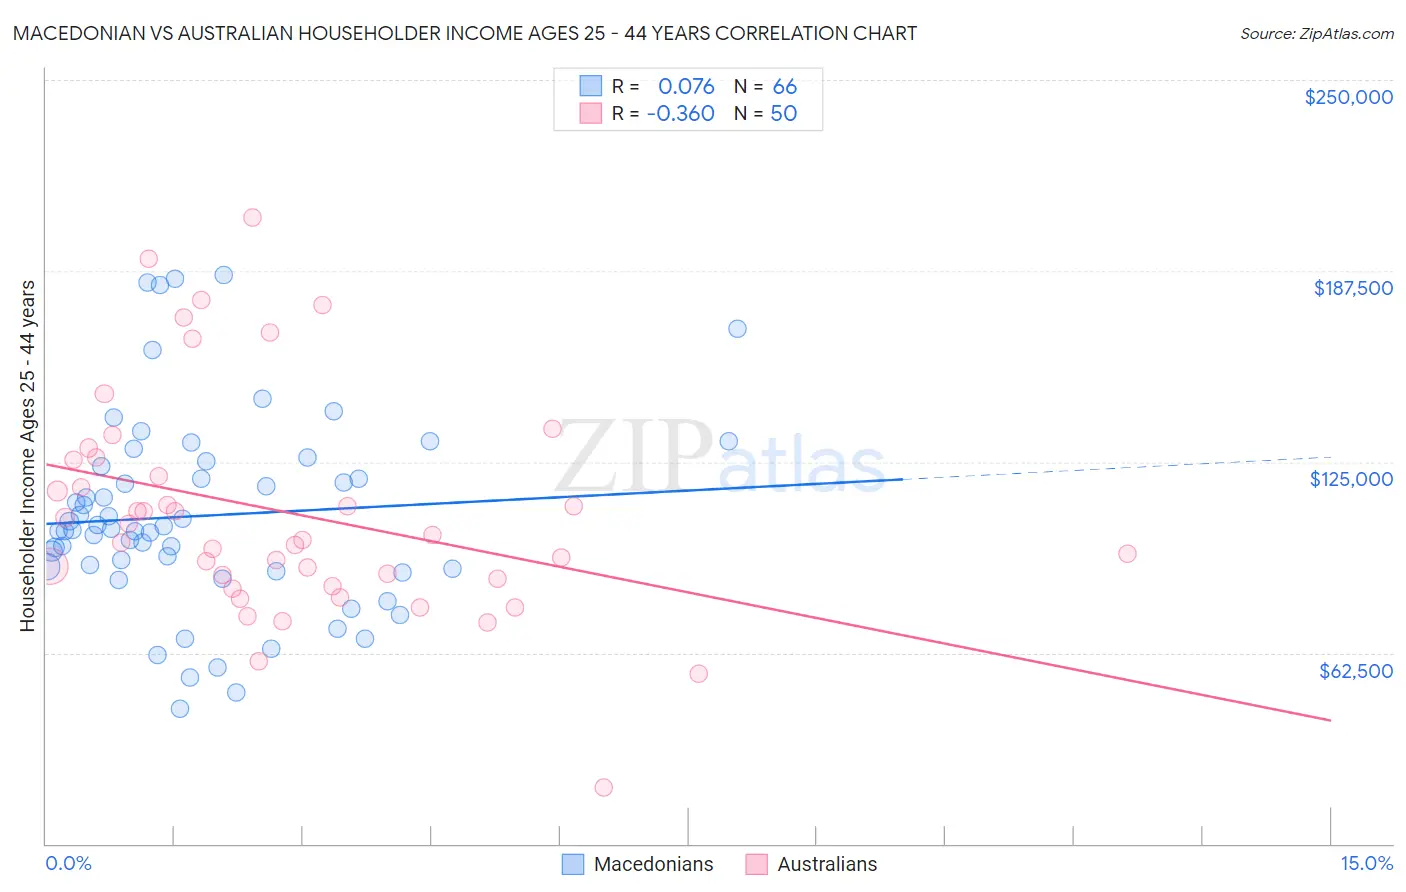 Macedonian vs Australian Householder Income Ages 25 - 44 years